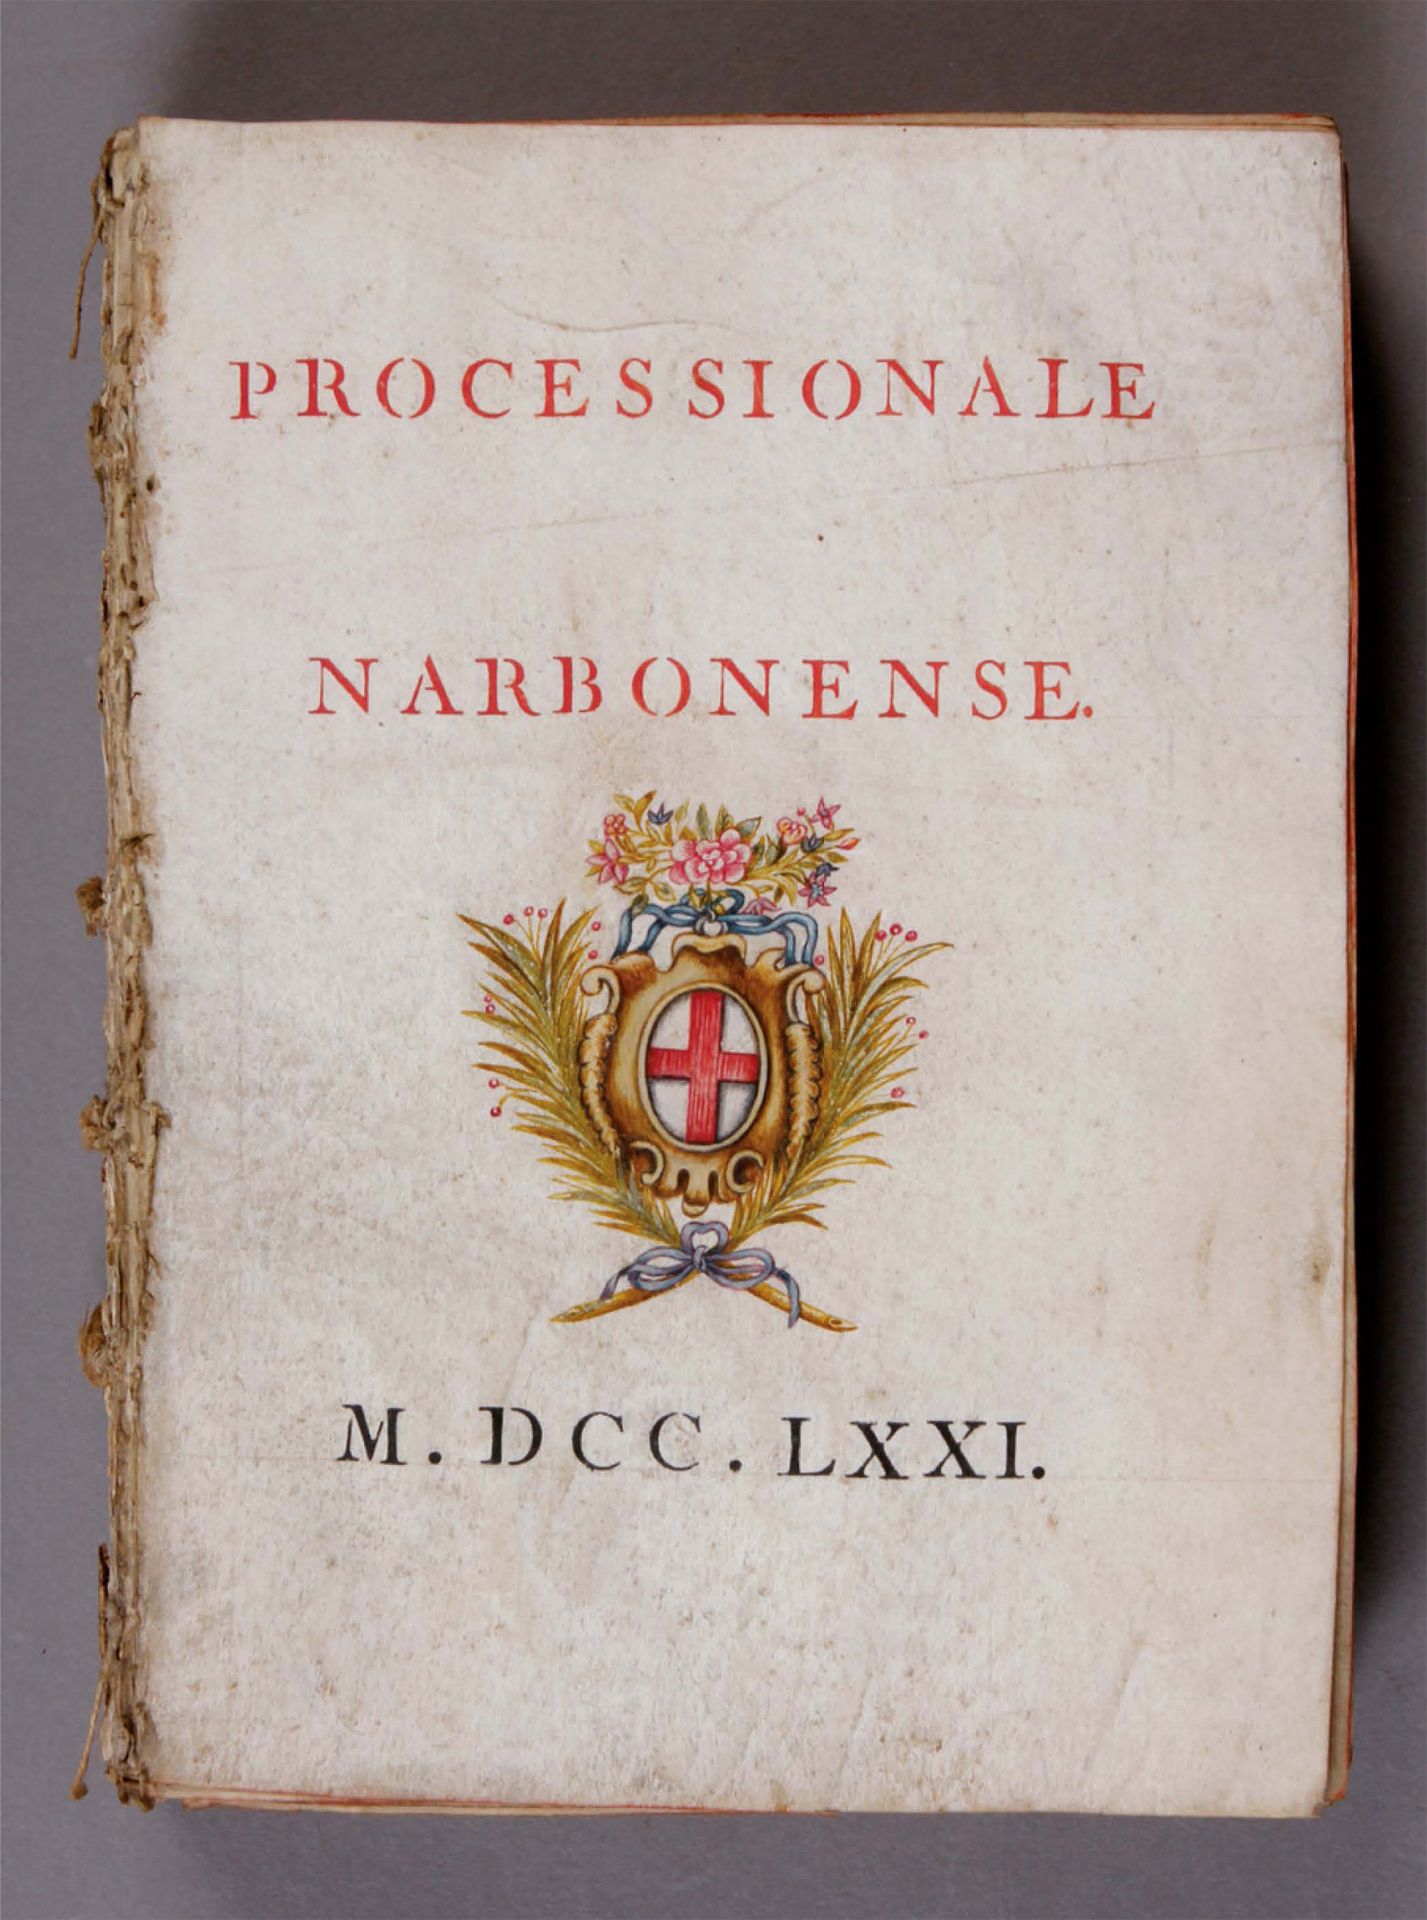 Null [Antiphonary on vellum 18th century]. 
PROCESSIONNALE NARBONENSE 1771. Litu&hellip;